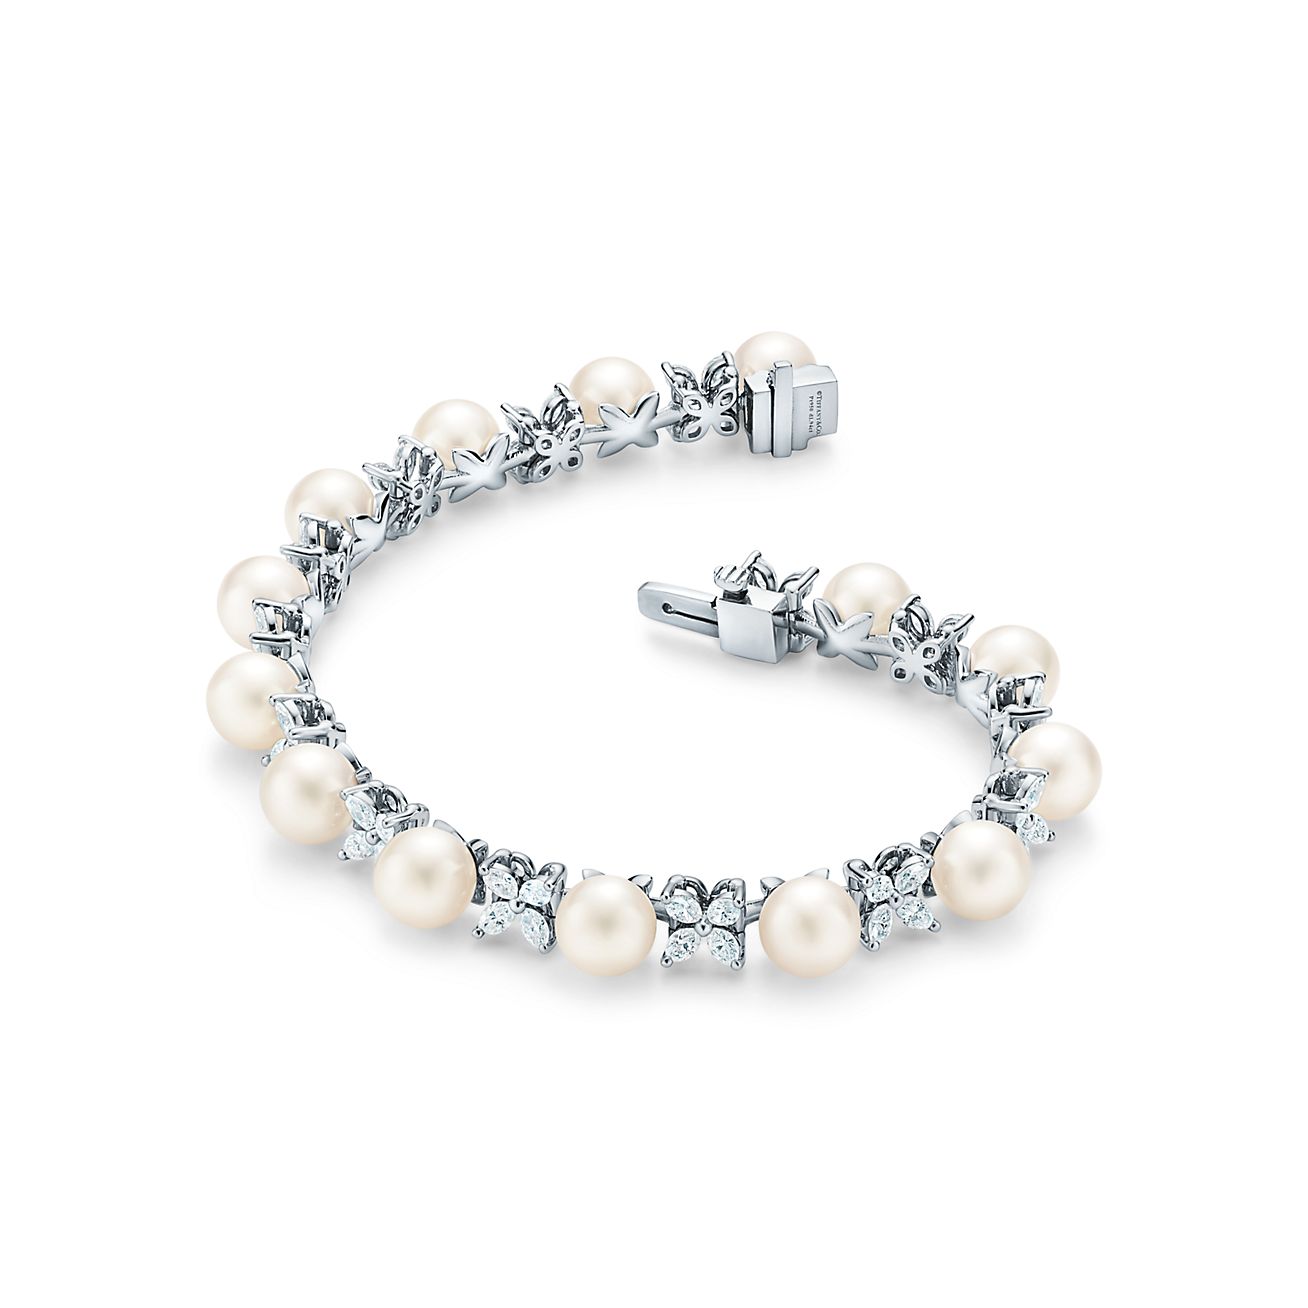 Tiffany  Co Sapphire and Diamond Bracelet in Plati 505556  Beladora